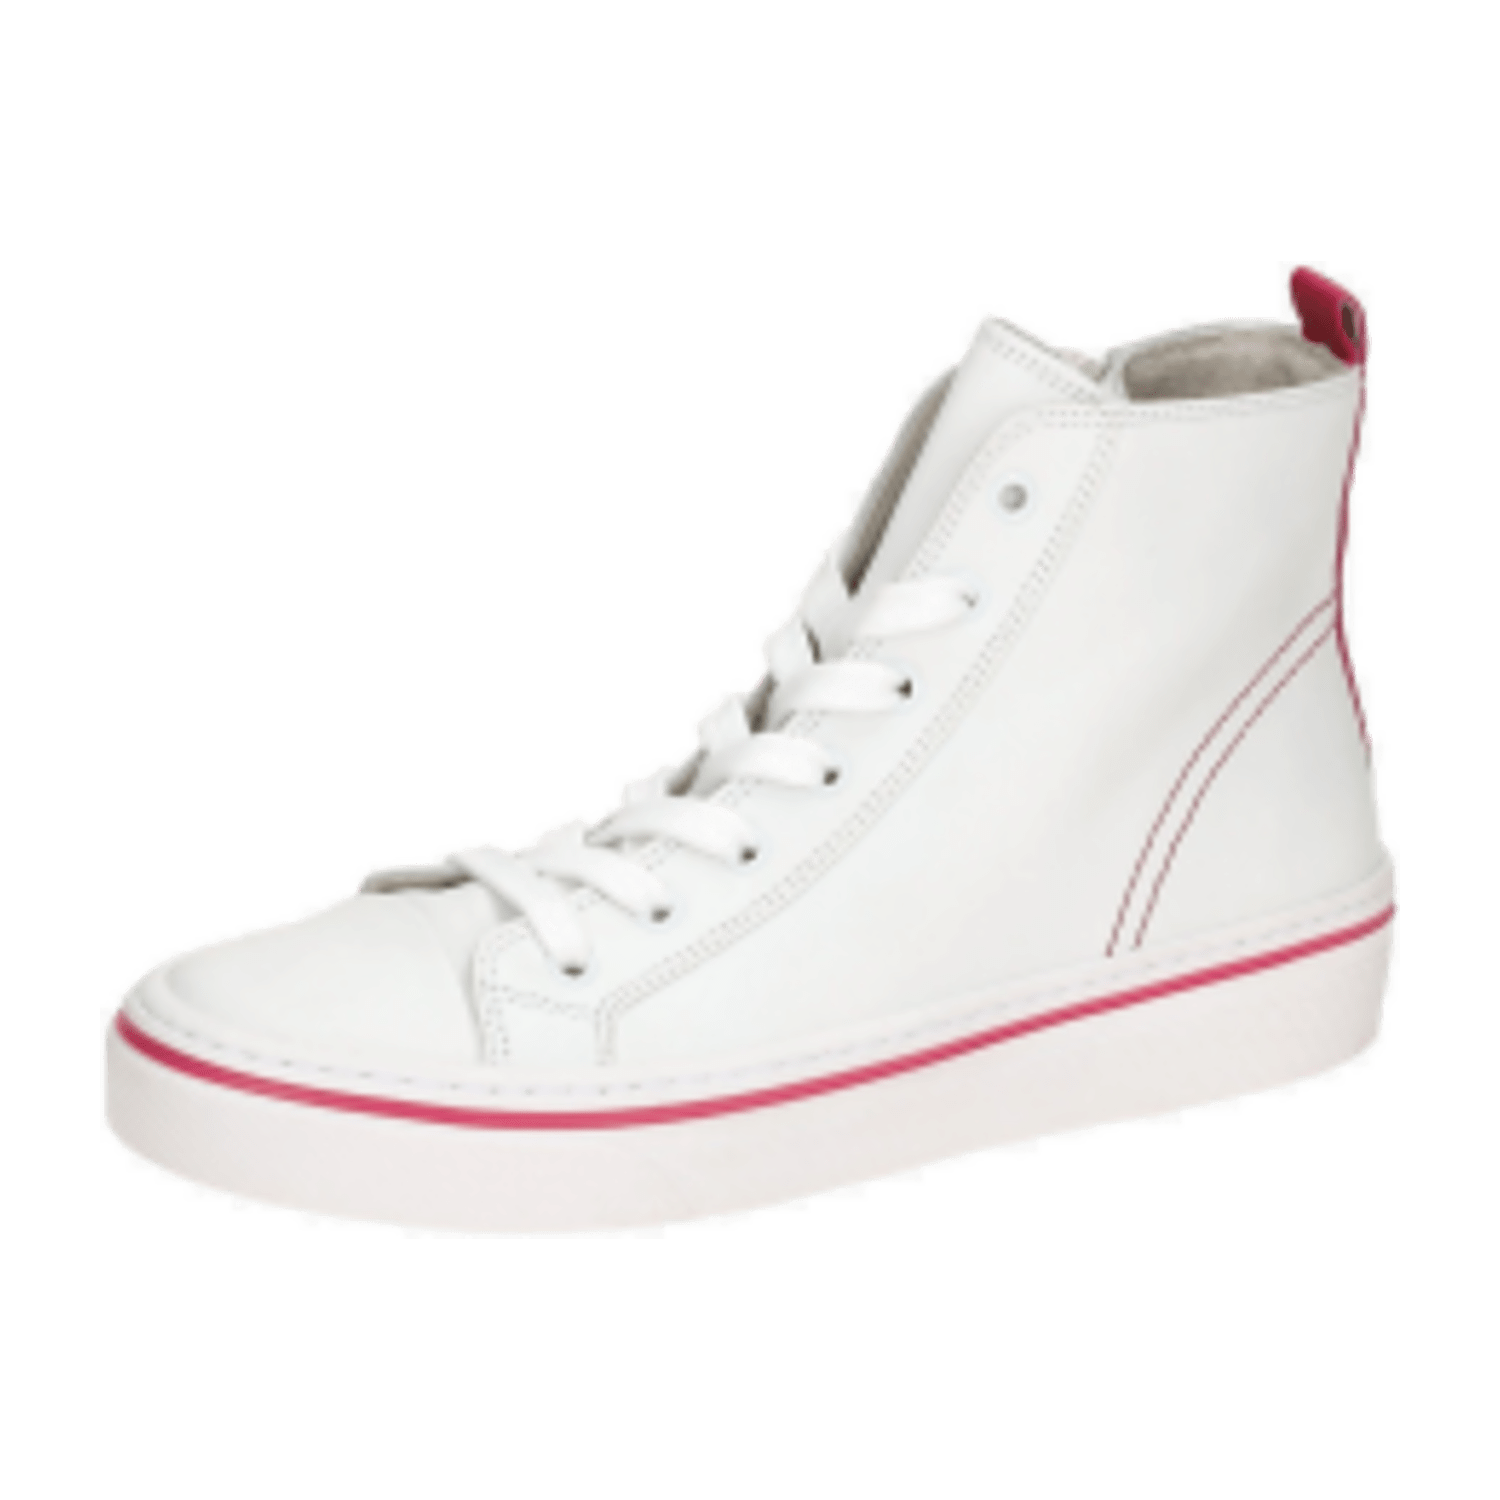 Gabor Mid Sneakers Stiefelette weiß pink 43.160.20